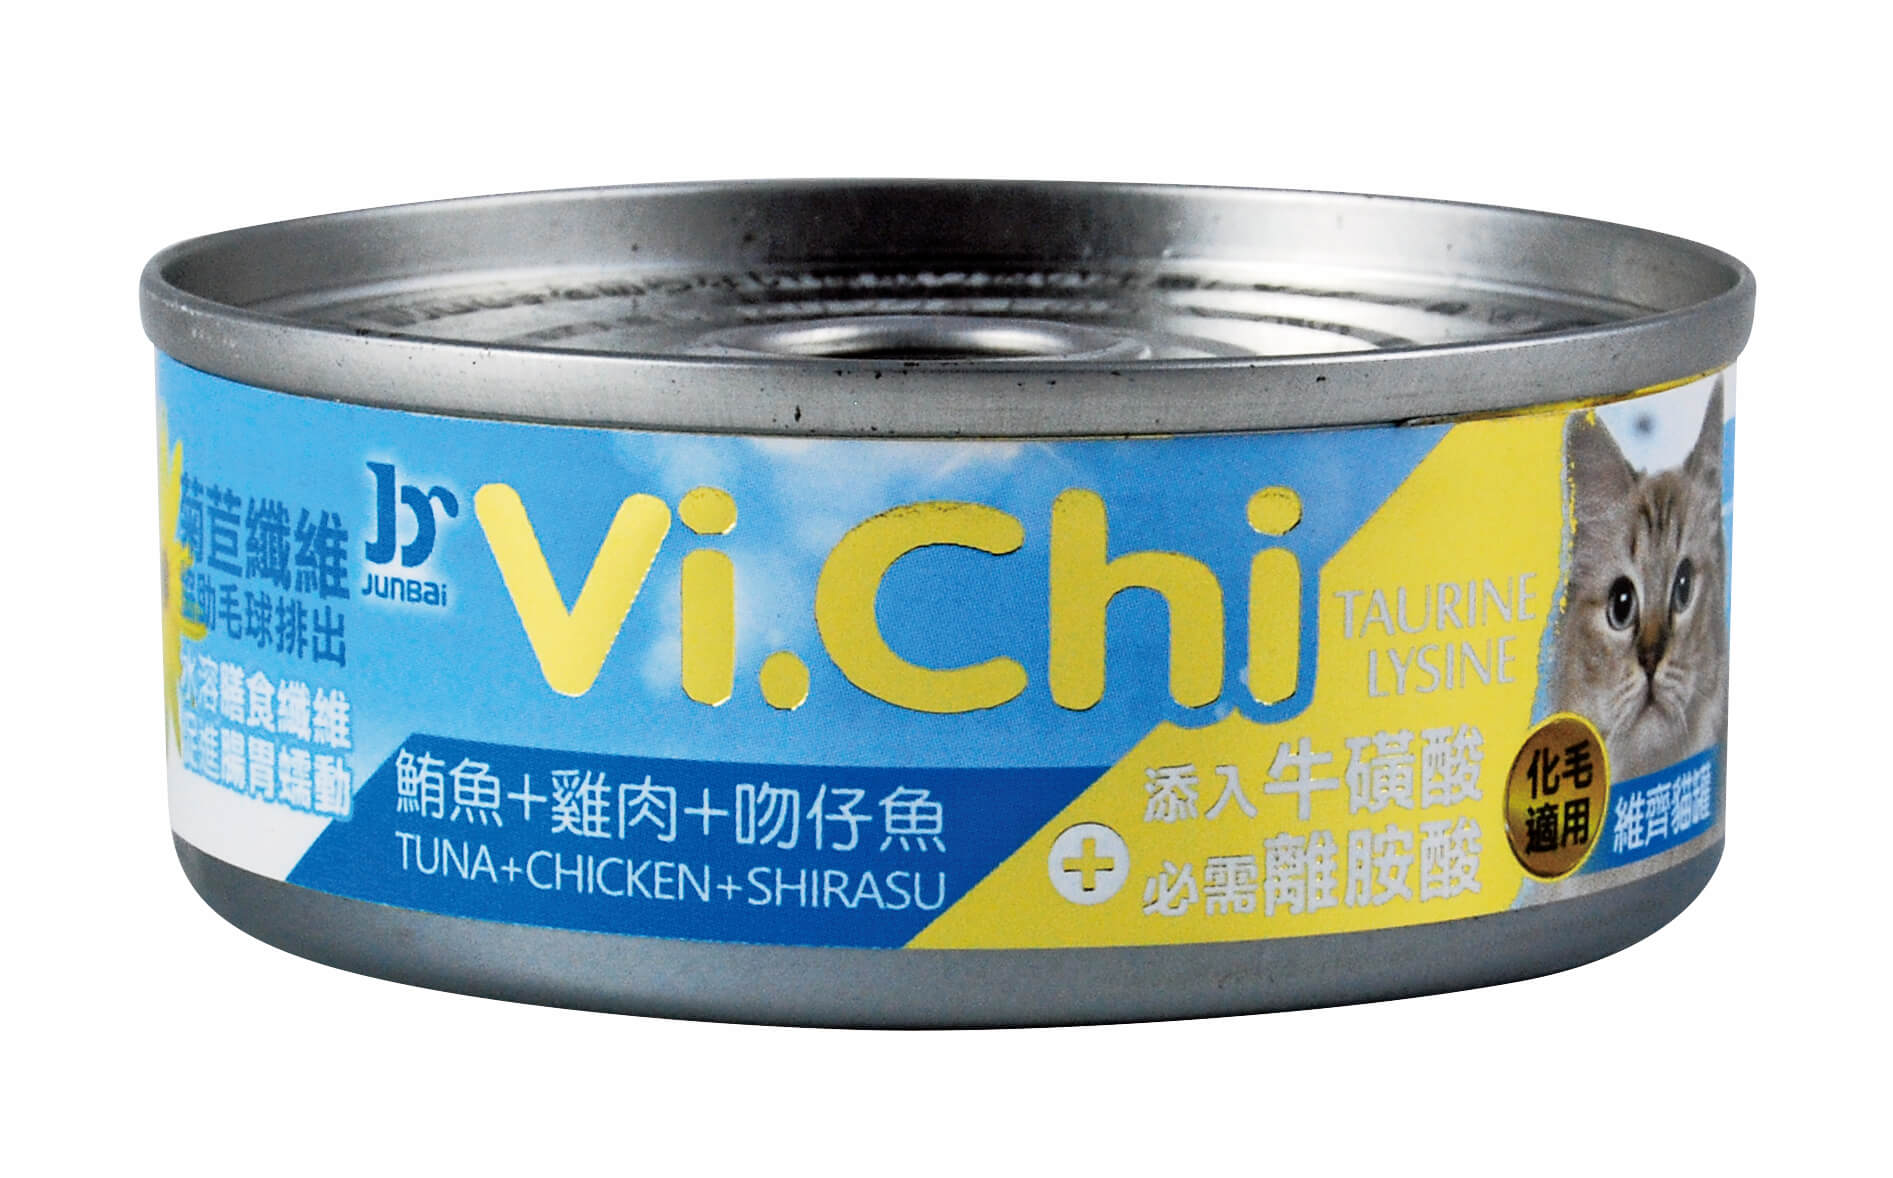 維齊貓罐-鮪魚+雞肉+吻仔魚
Vi.Chi cat can-tuna+chicken+shirasu